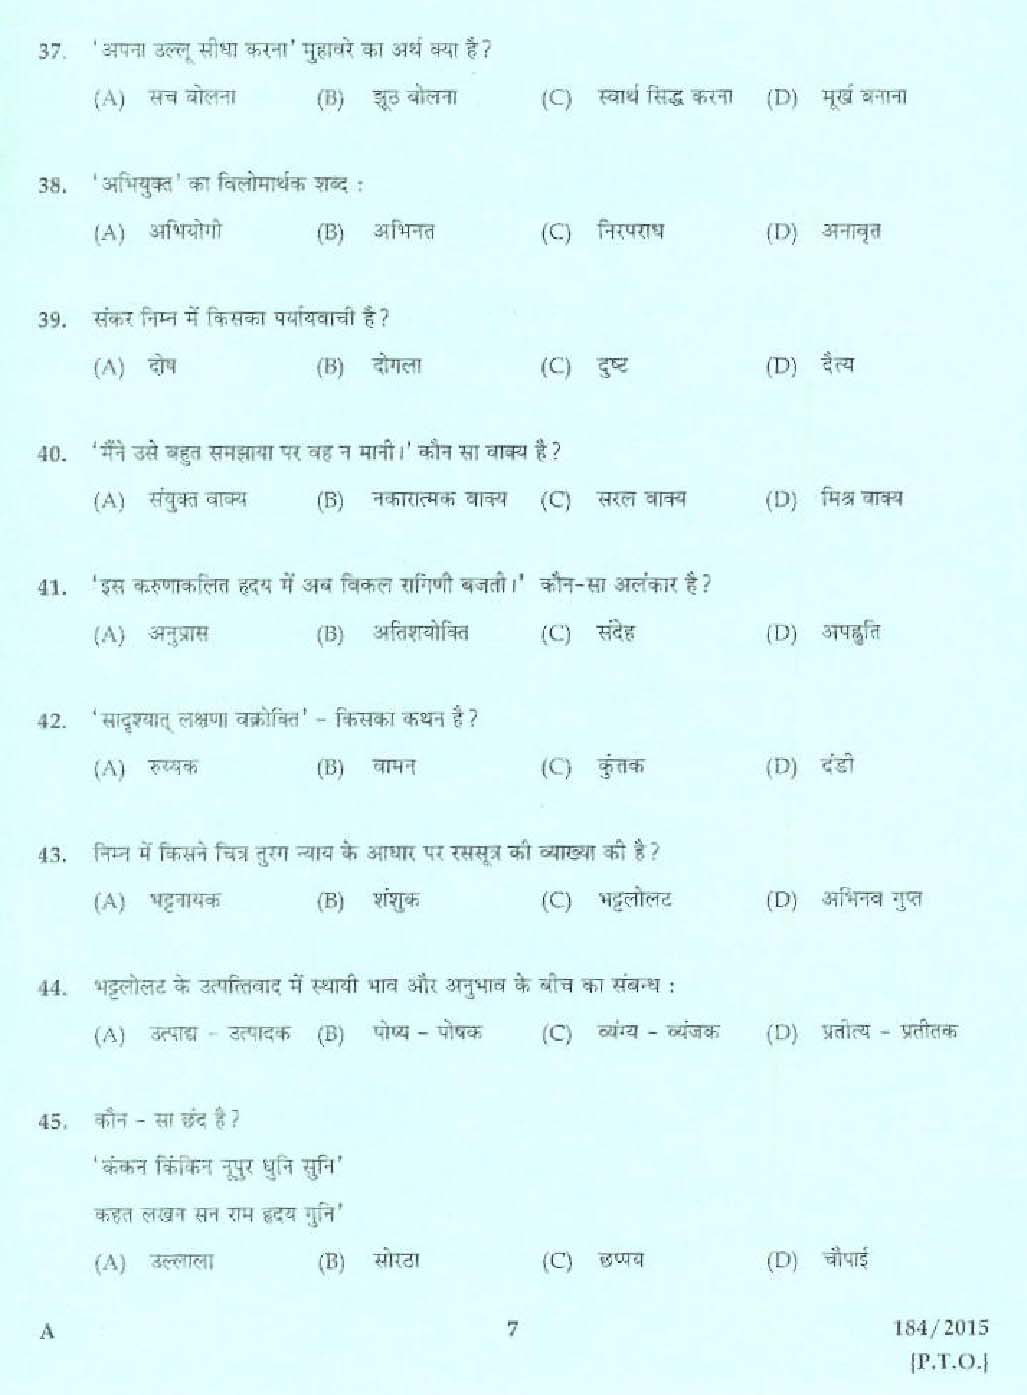 KPSC Lecturer in Hindi Exam 2015 Code 1842015 3